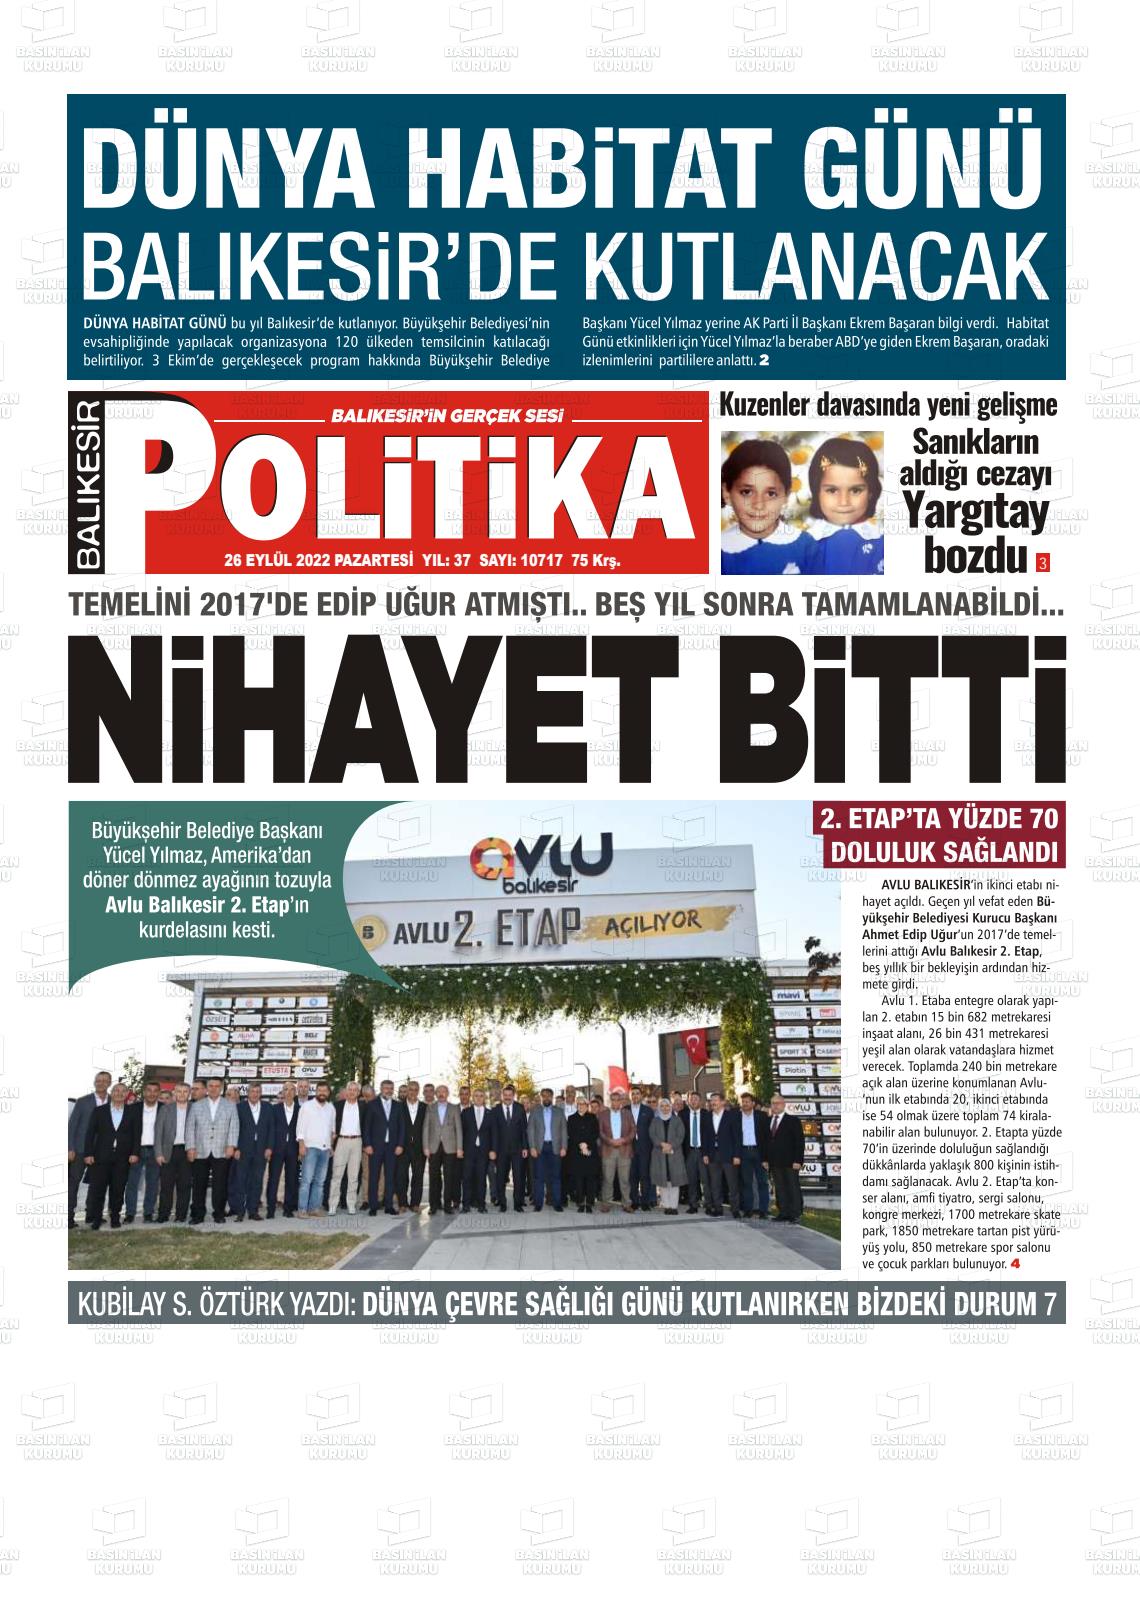 26 Eylül 2022 Balıkesir Politika Gazete Manşeti